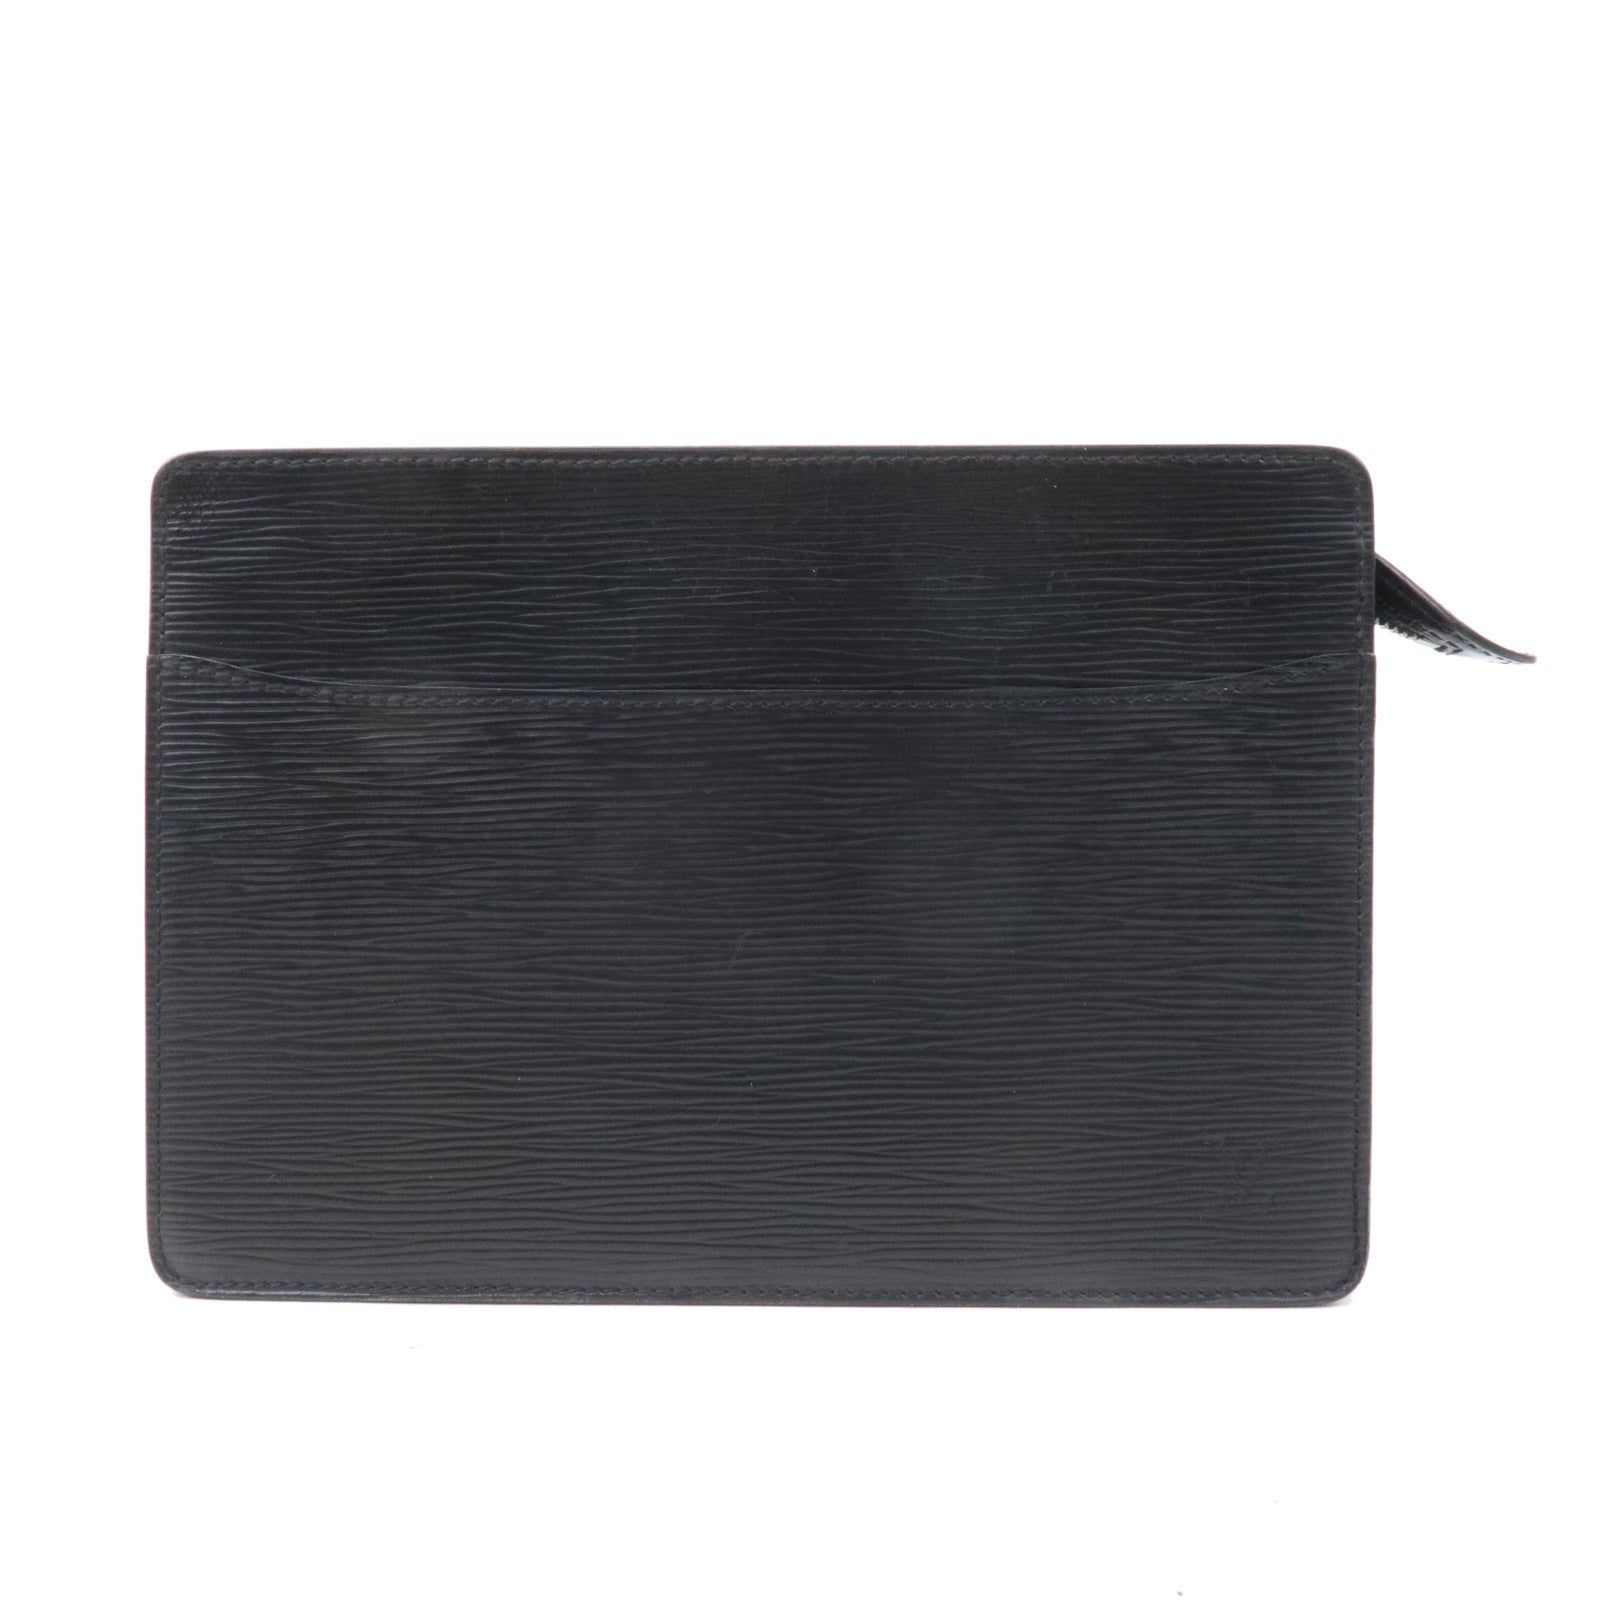 Louis Vuitton Epi Leather Pochette Homme in Black Clutch Handbag